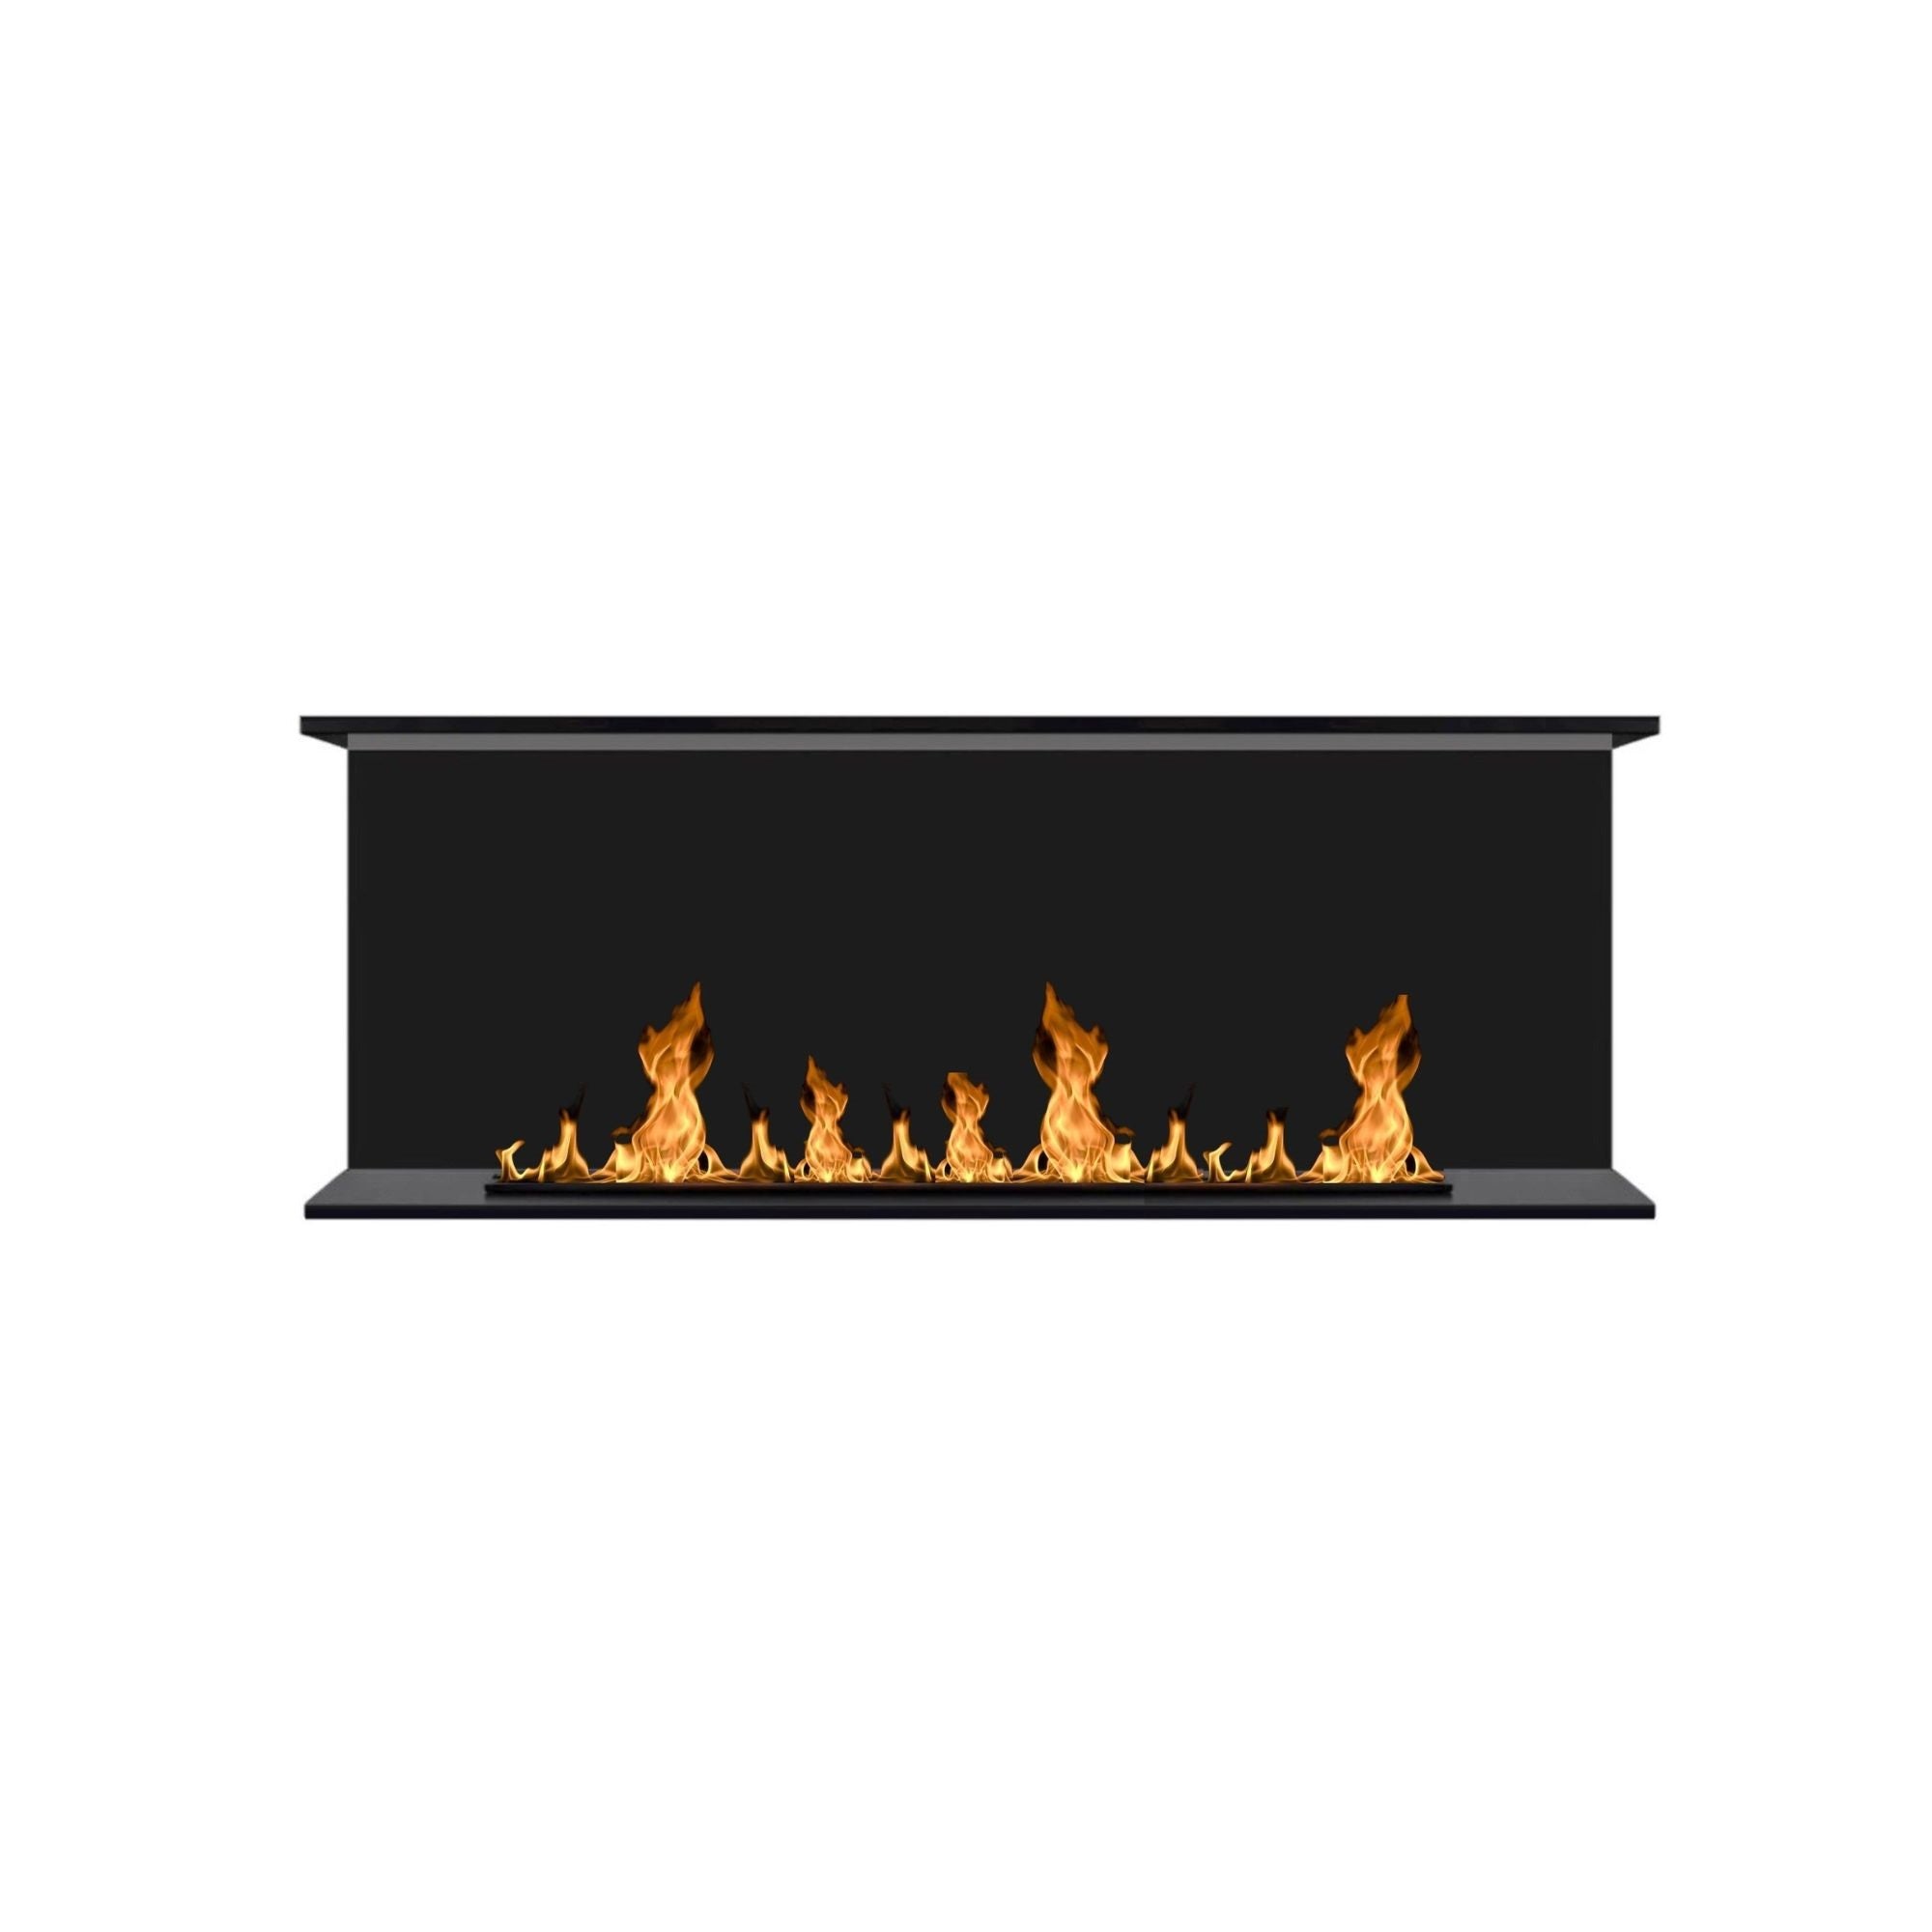 Izala Design Built-in Fireplace 120 CM